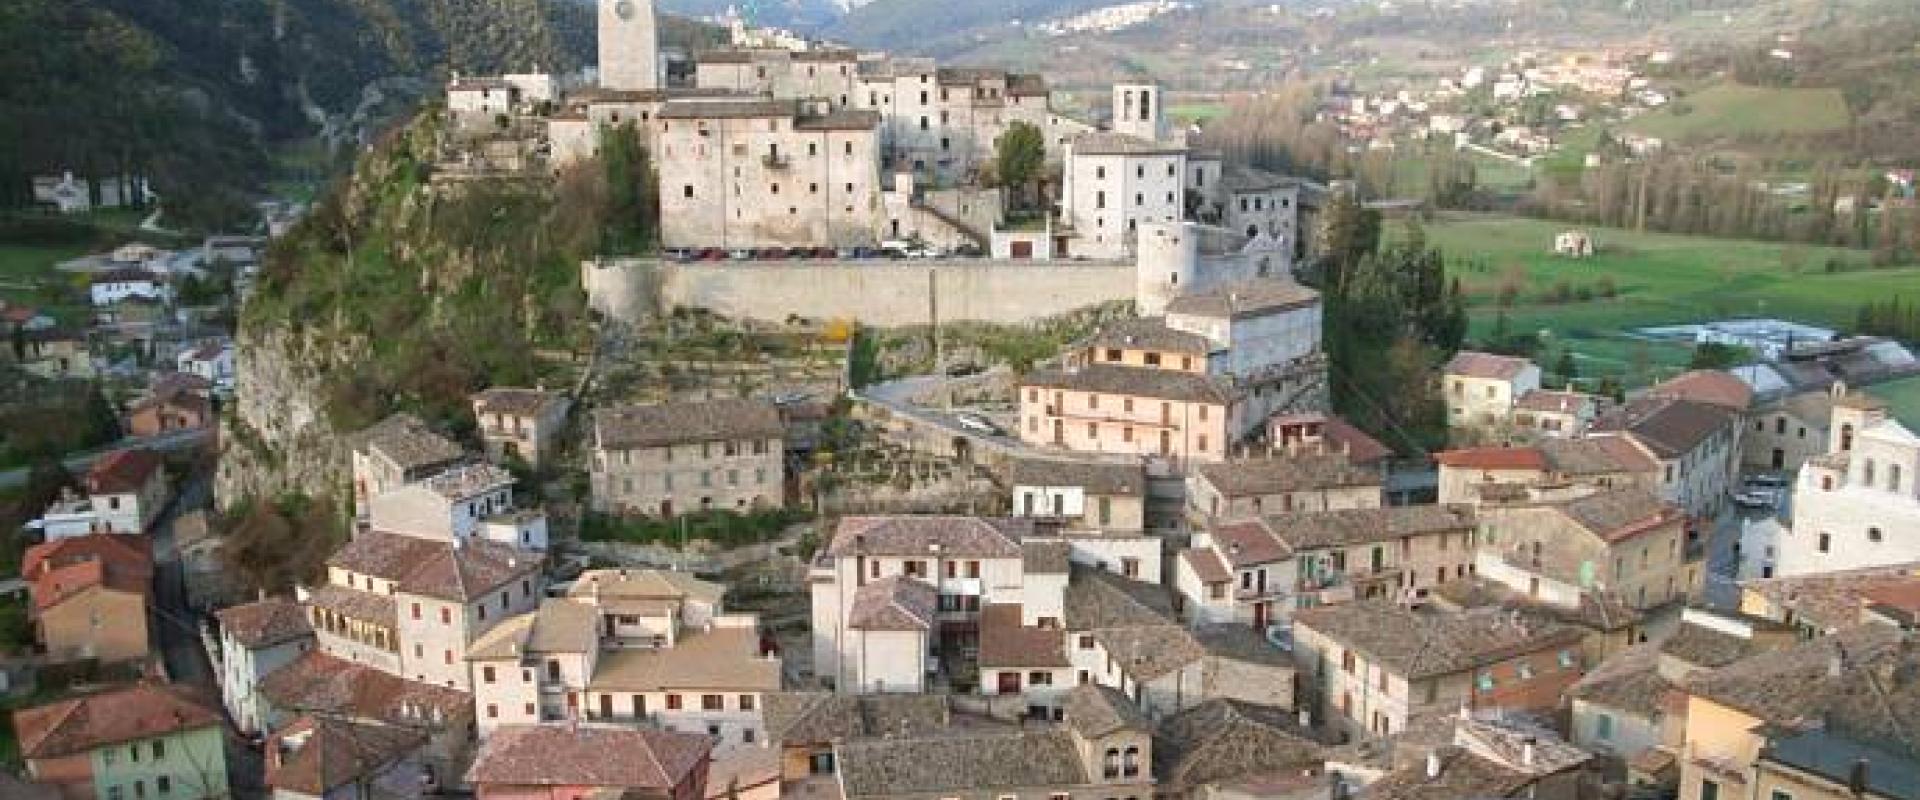 Viist of Arrone Umbria